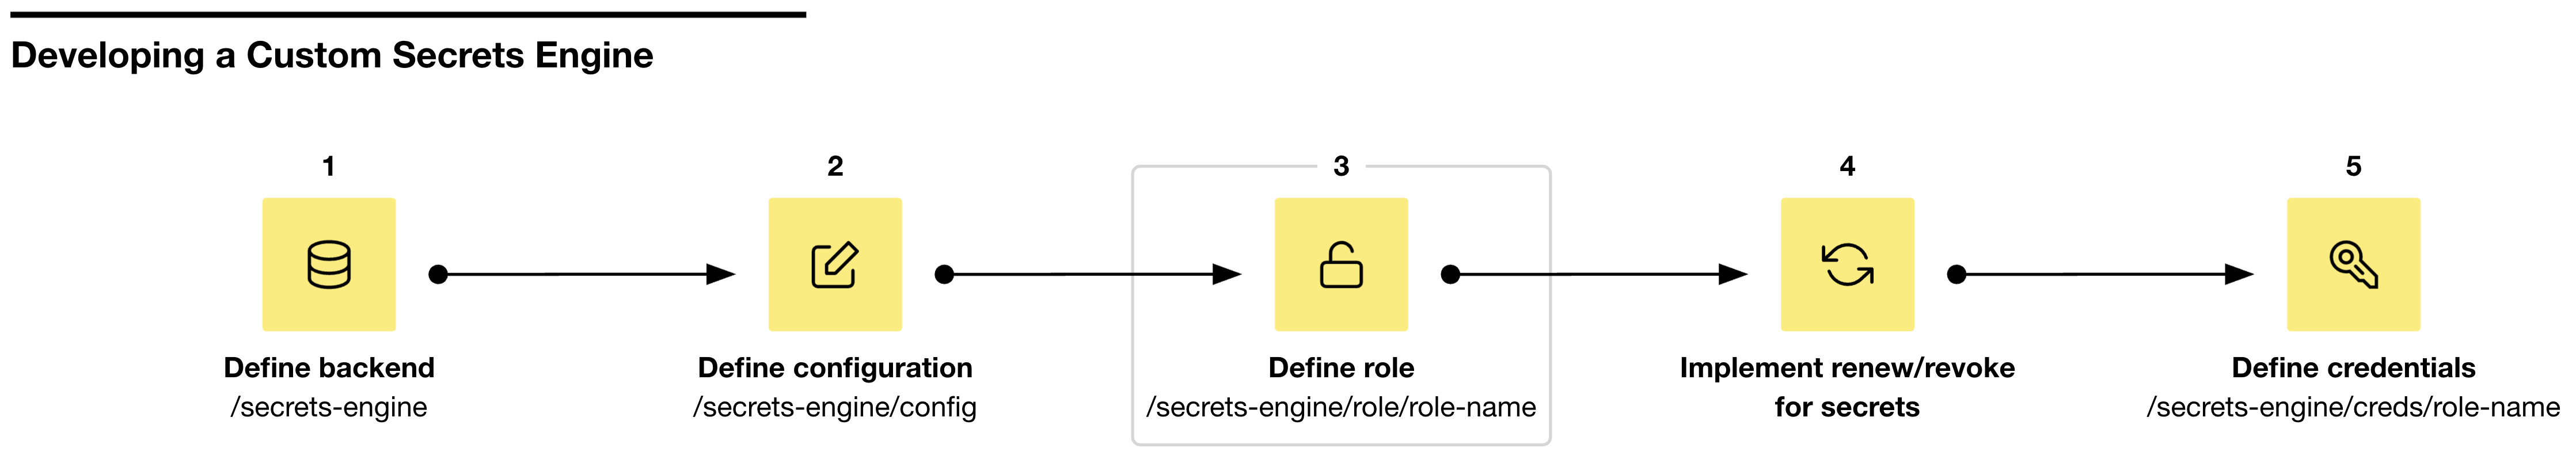 Step 3 creates secrets engine role at /secrets-engine/role